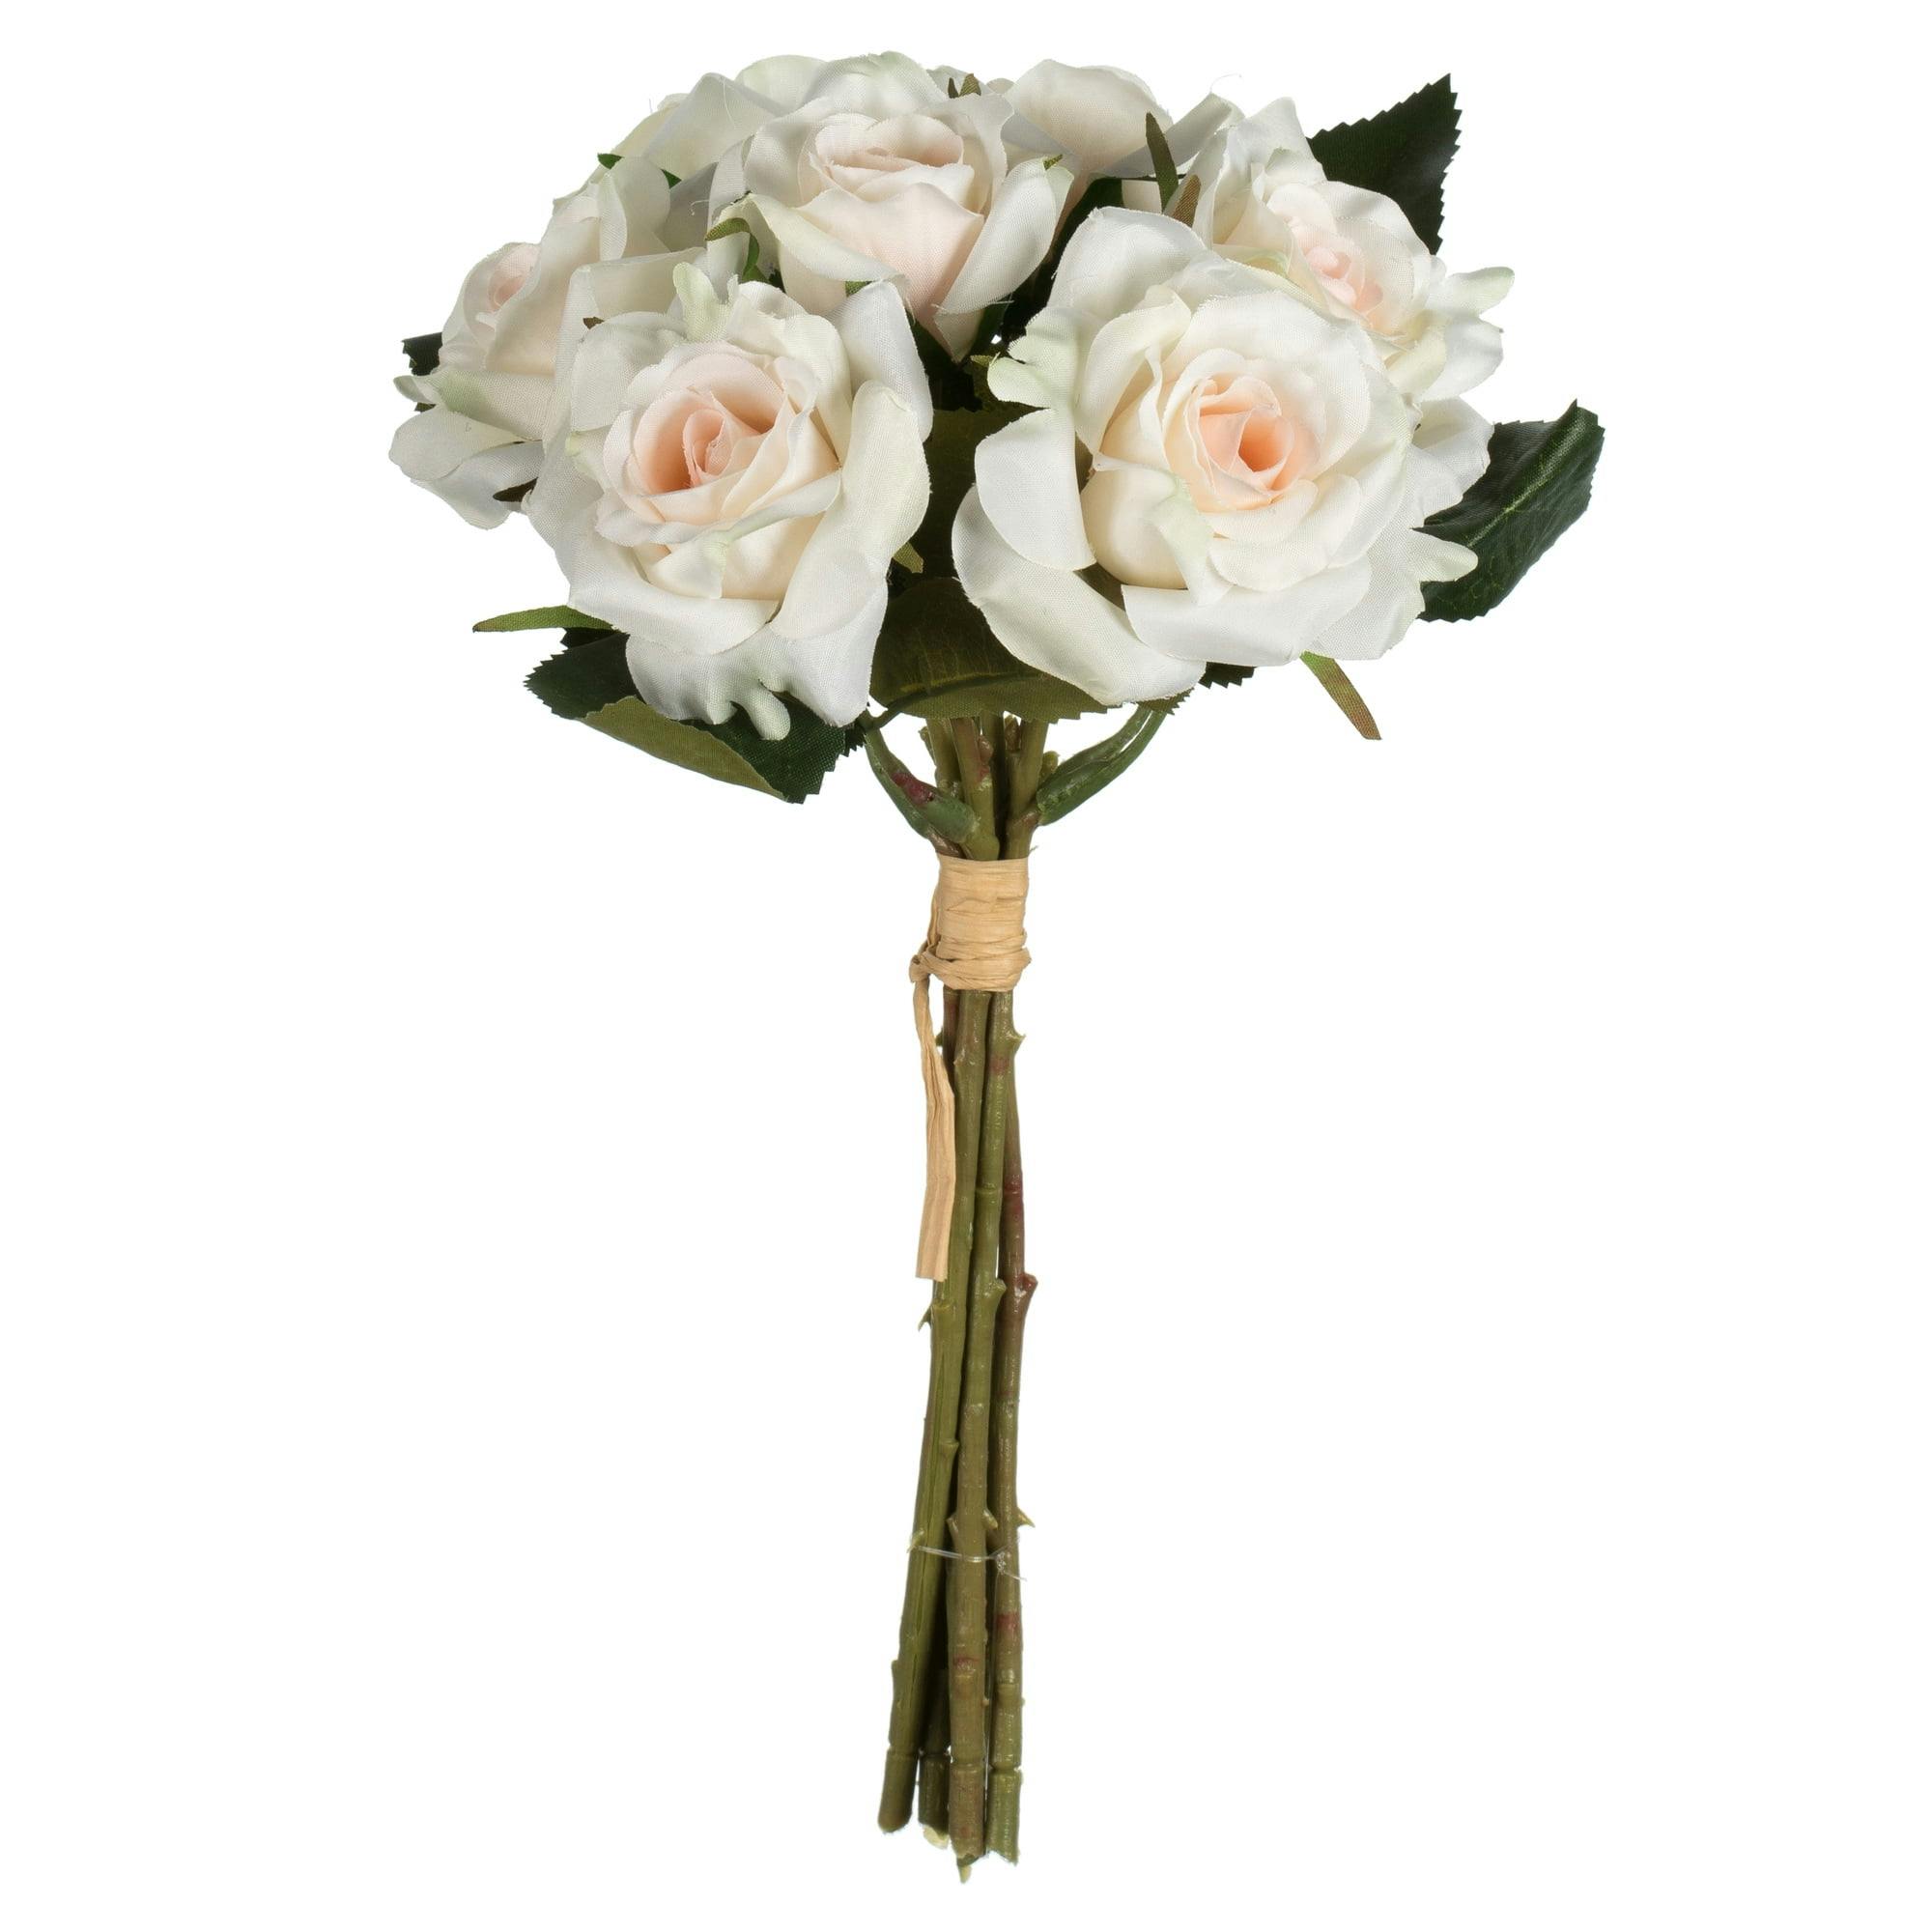 Elegant Cream Rose Artificial Bouquet 10" with Lush Foliage